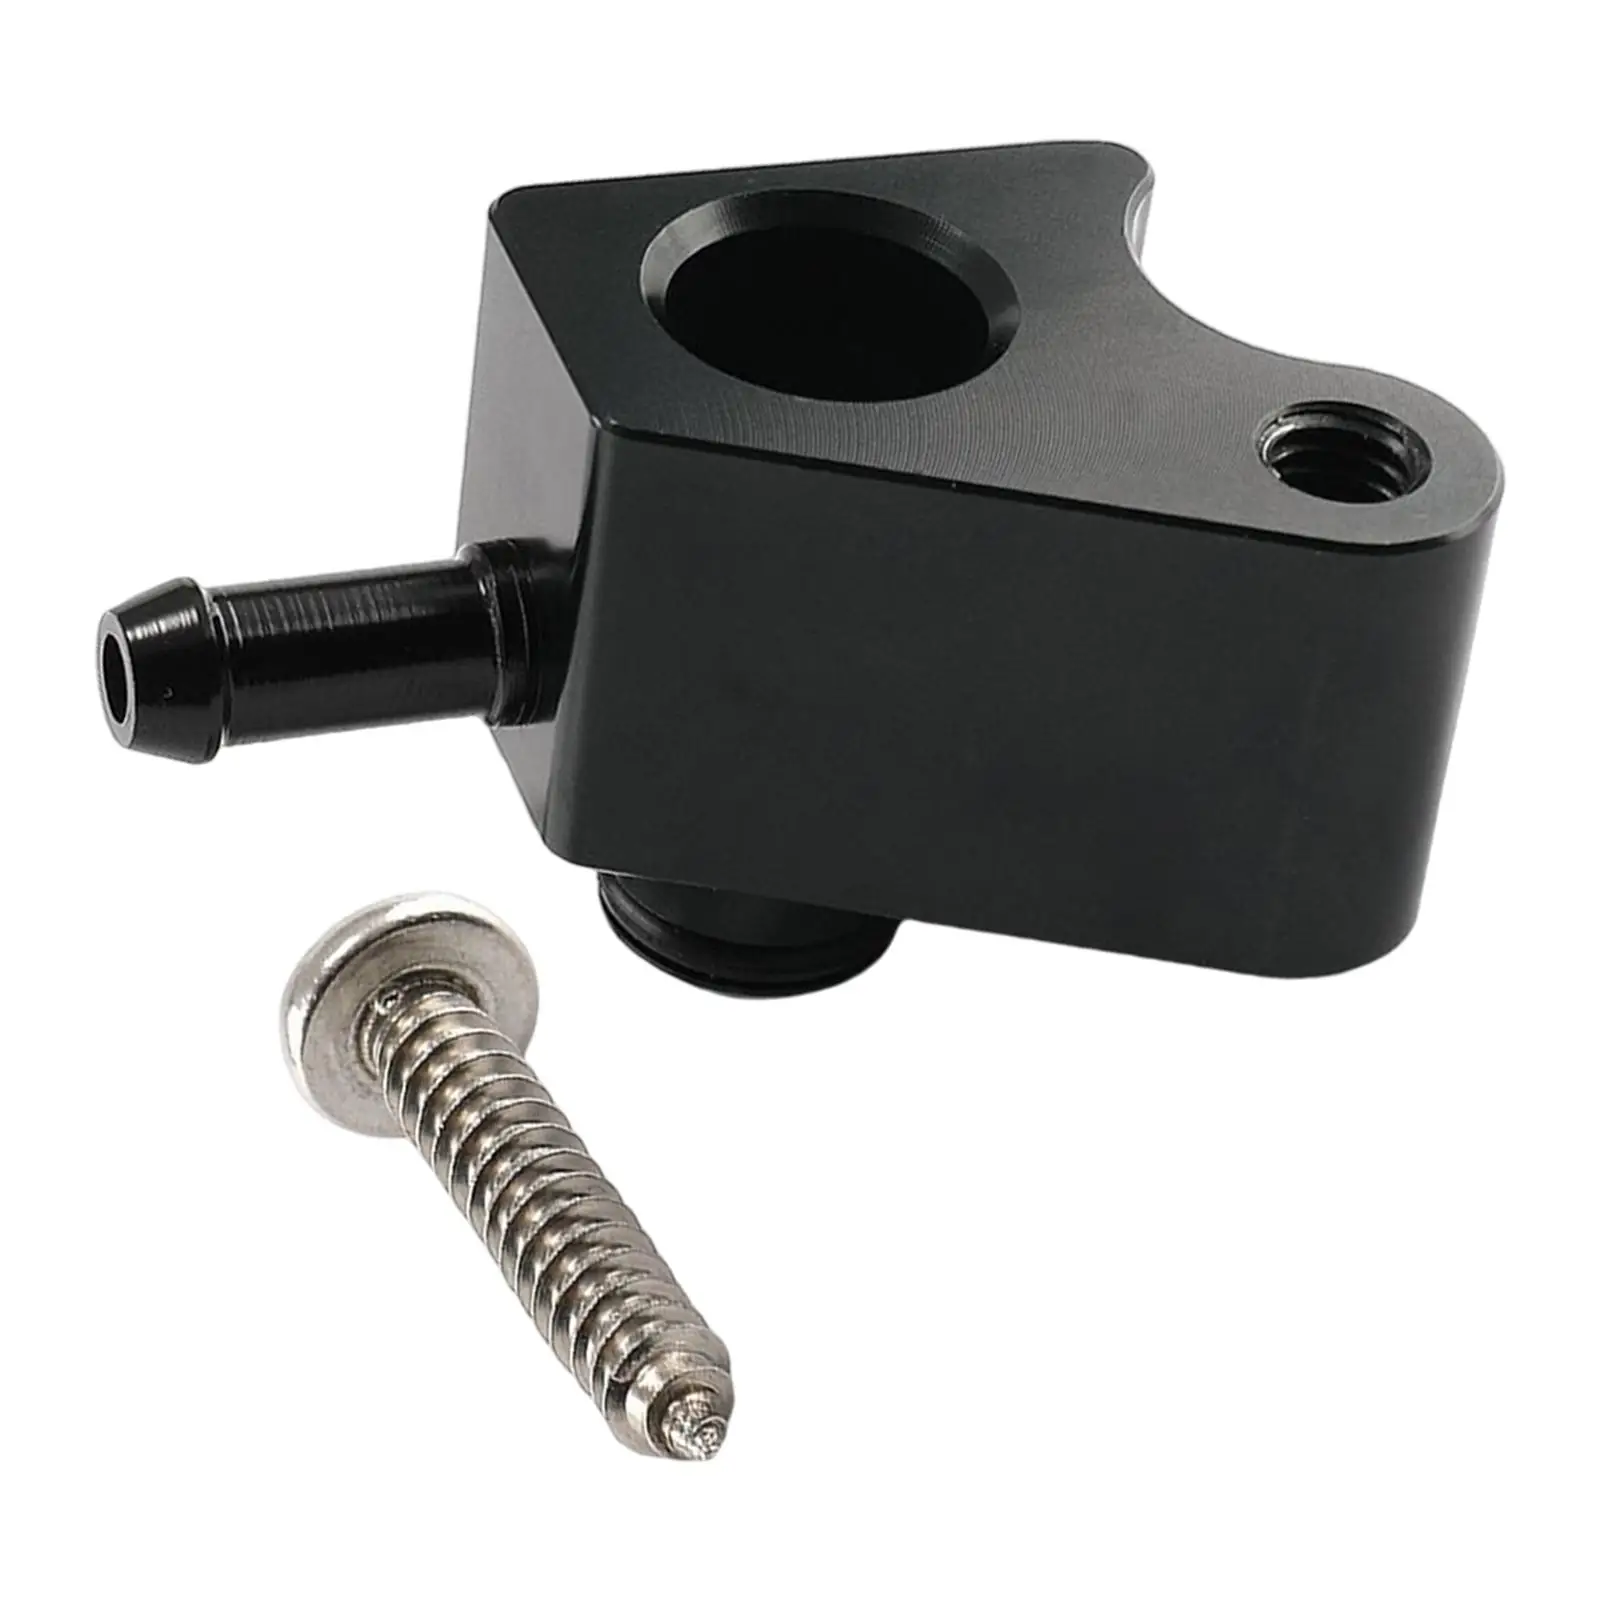  Adapter CNC  Accessories BlackTurbochargers   2.0T Engines ,Vehicle Parts, Car Supplies